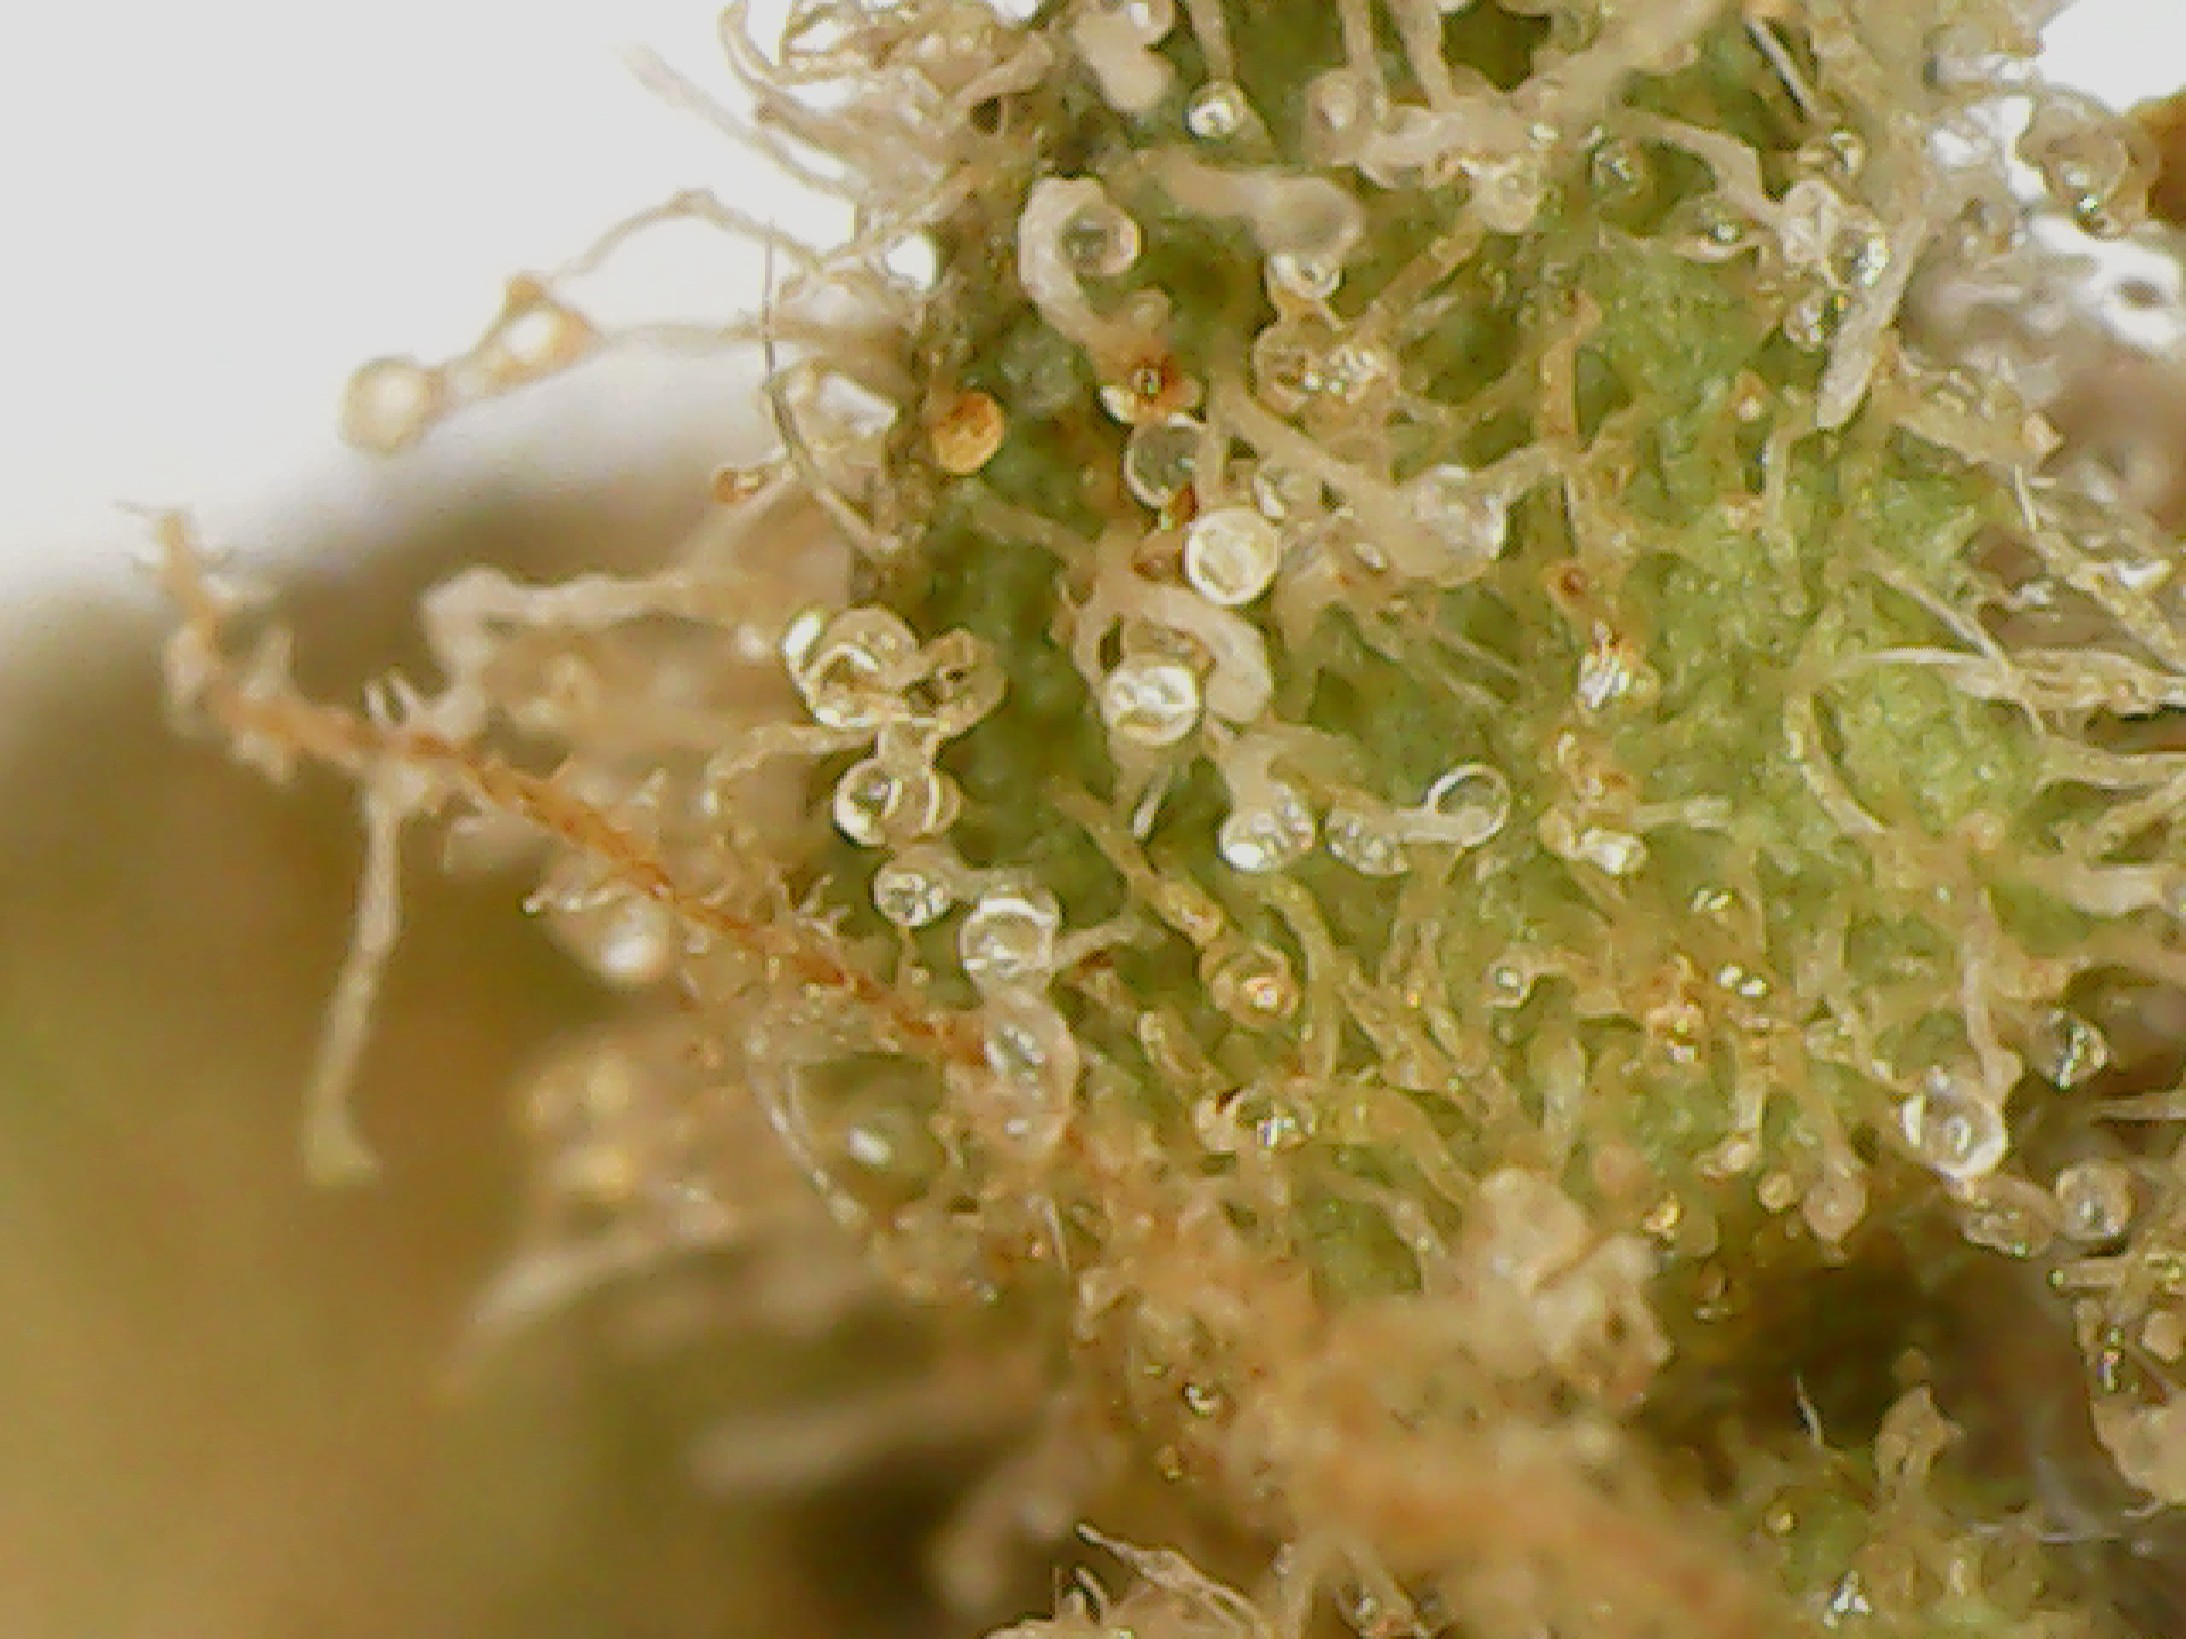 Canadian Cannabis Cultivar Photos - Royal Goddess by Royal City Cannabis Licensed Producer Hybrid Weed Strain Review - Stashmagazine.ca - Volume 3